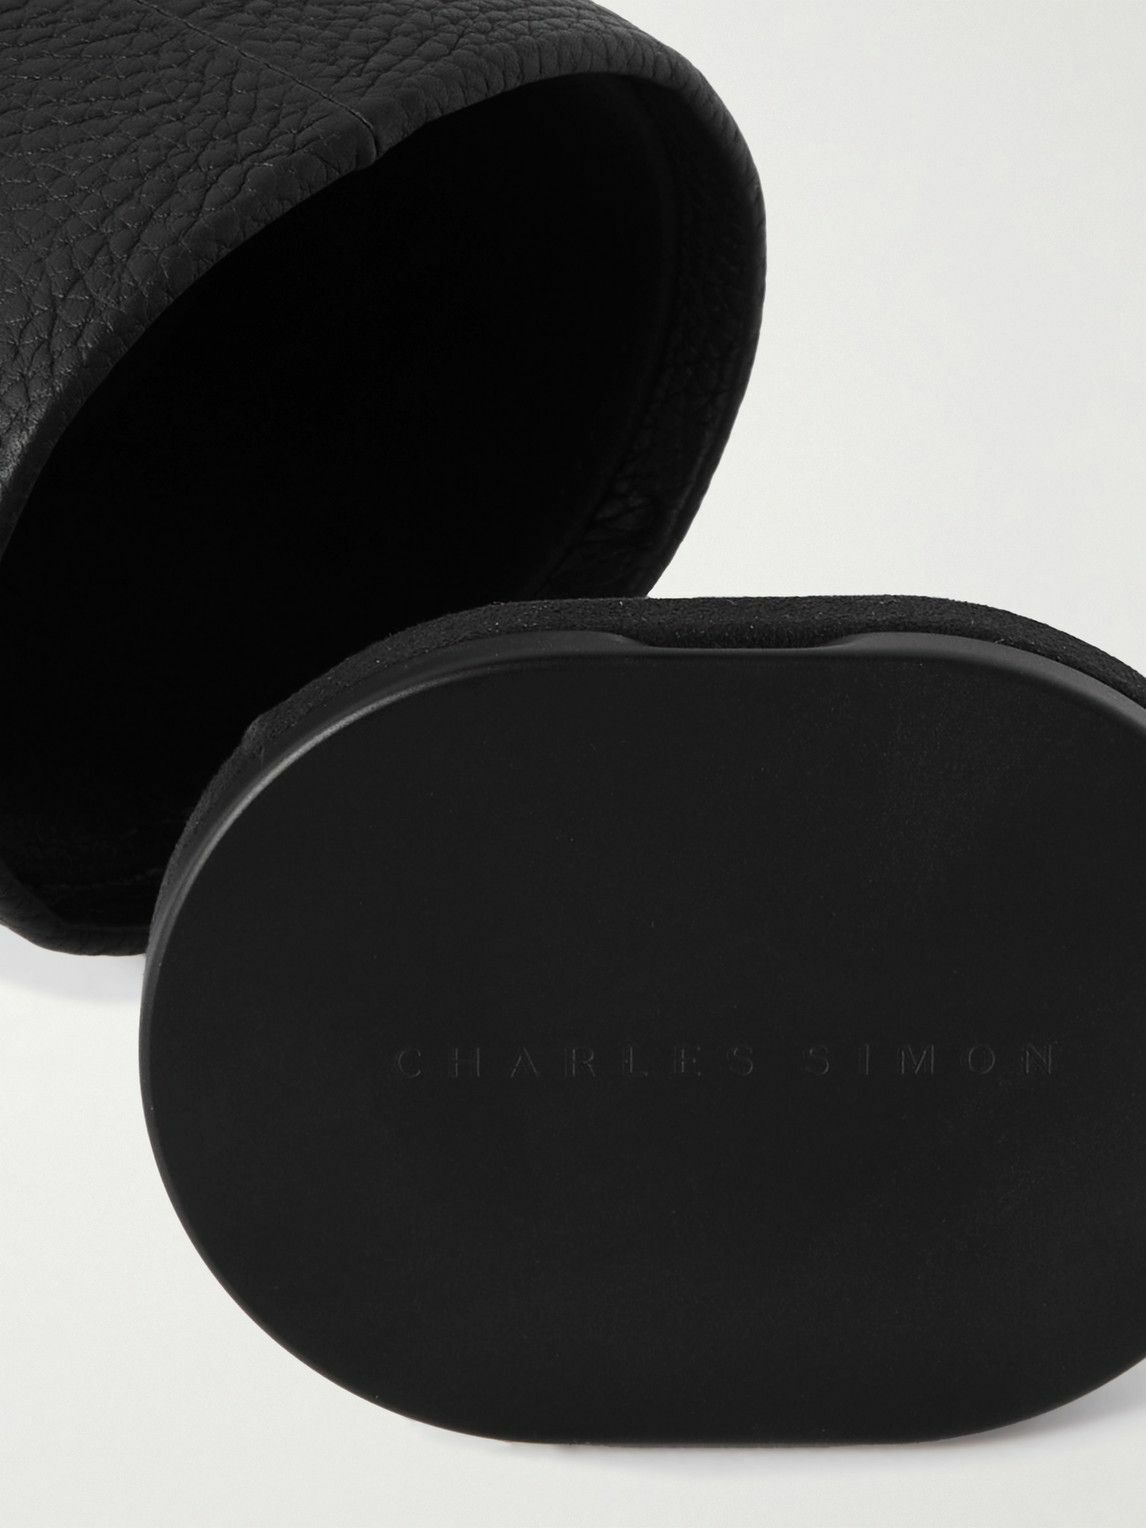 CHARLES SIMON Eaton Full-Grain Leather Three-Piece Travel Watch